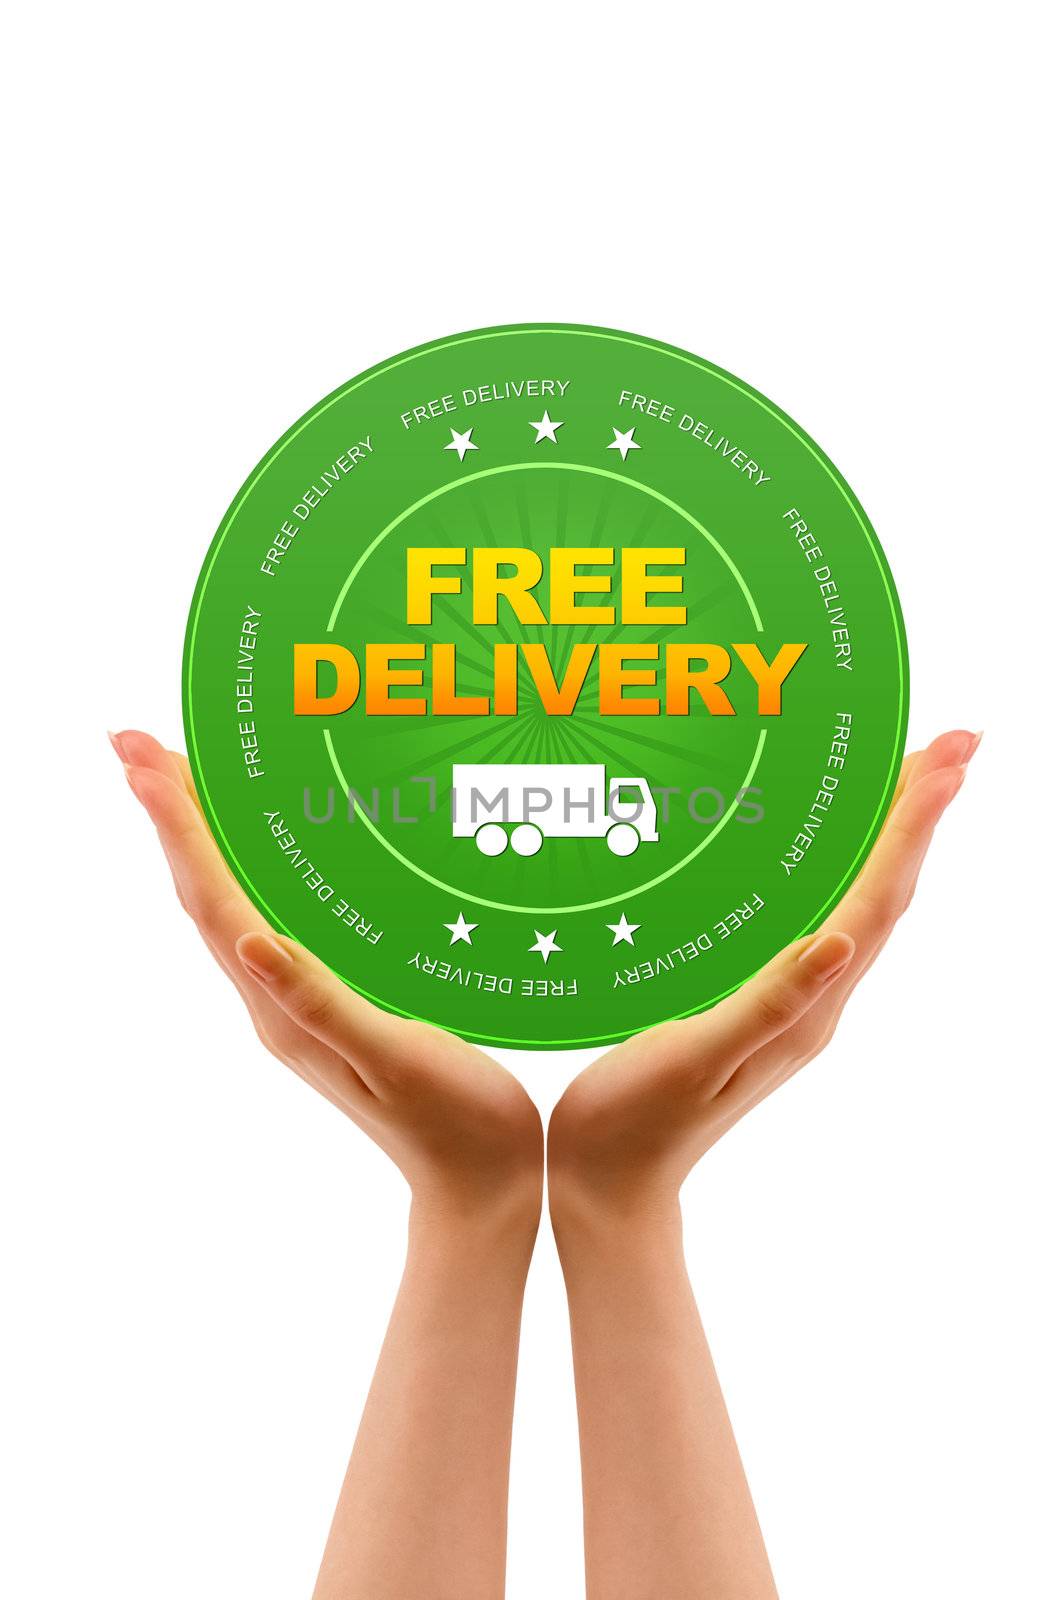 Free Delivery by kbuntu